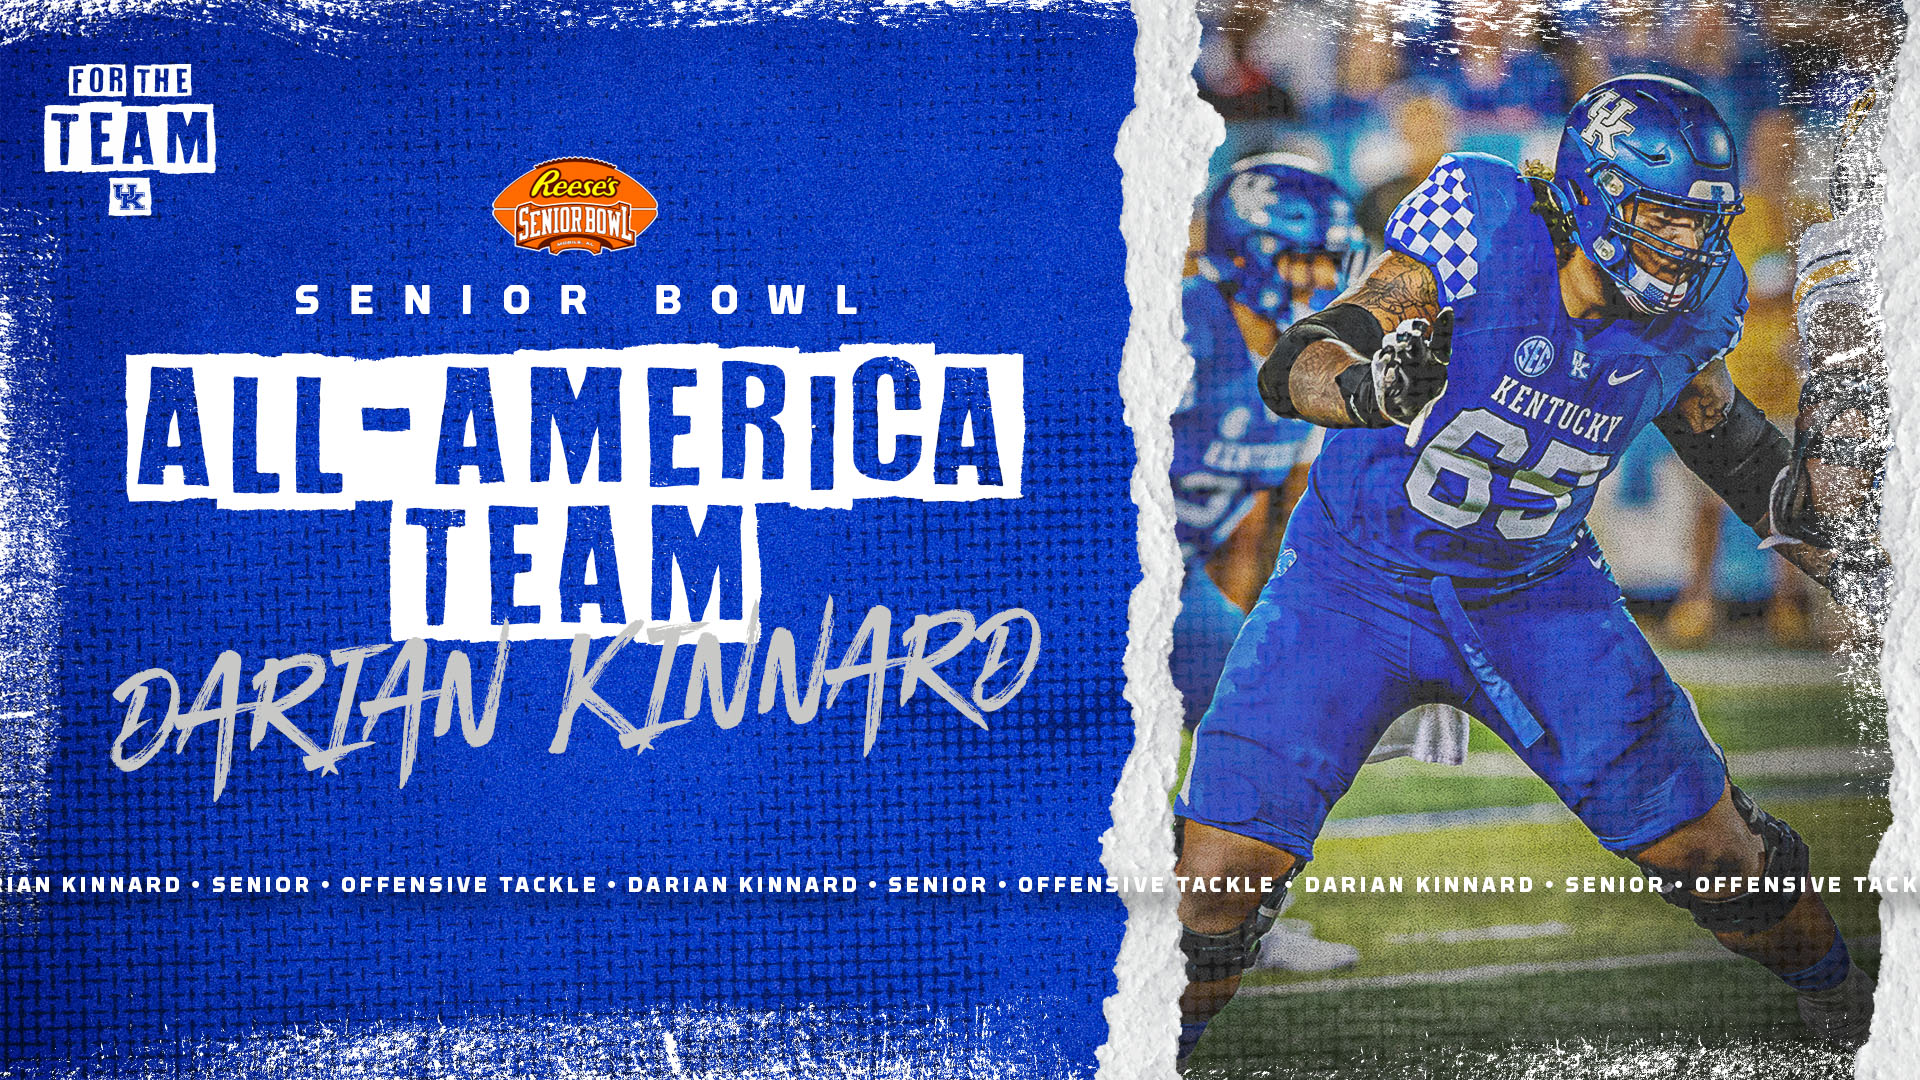 Darian Kinnard Named to Reese’s Senior Bowl All-America Team